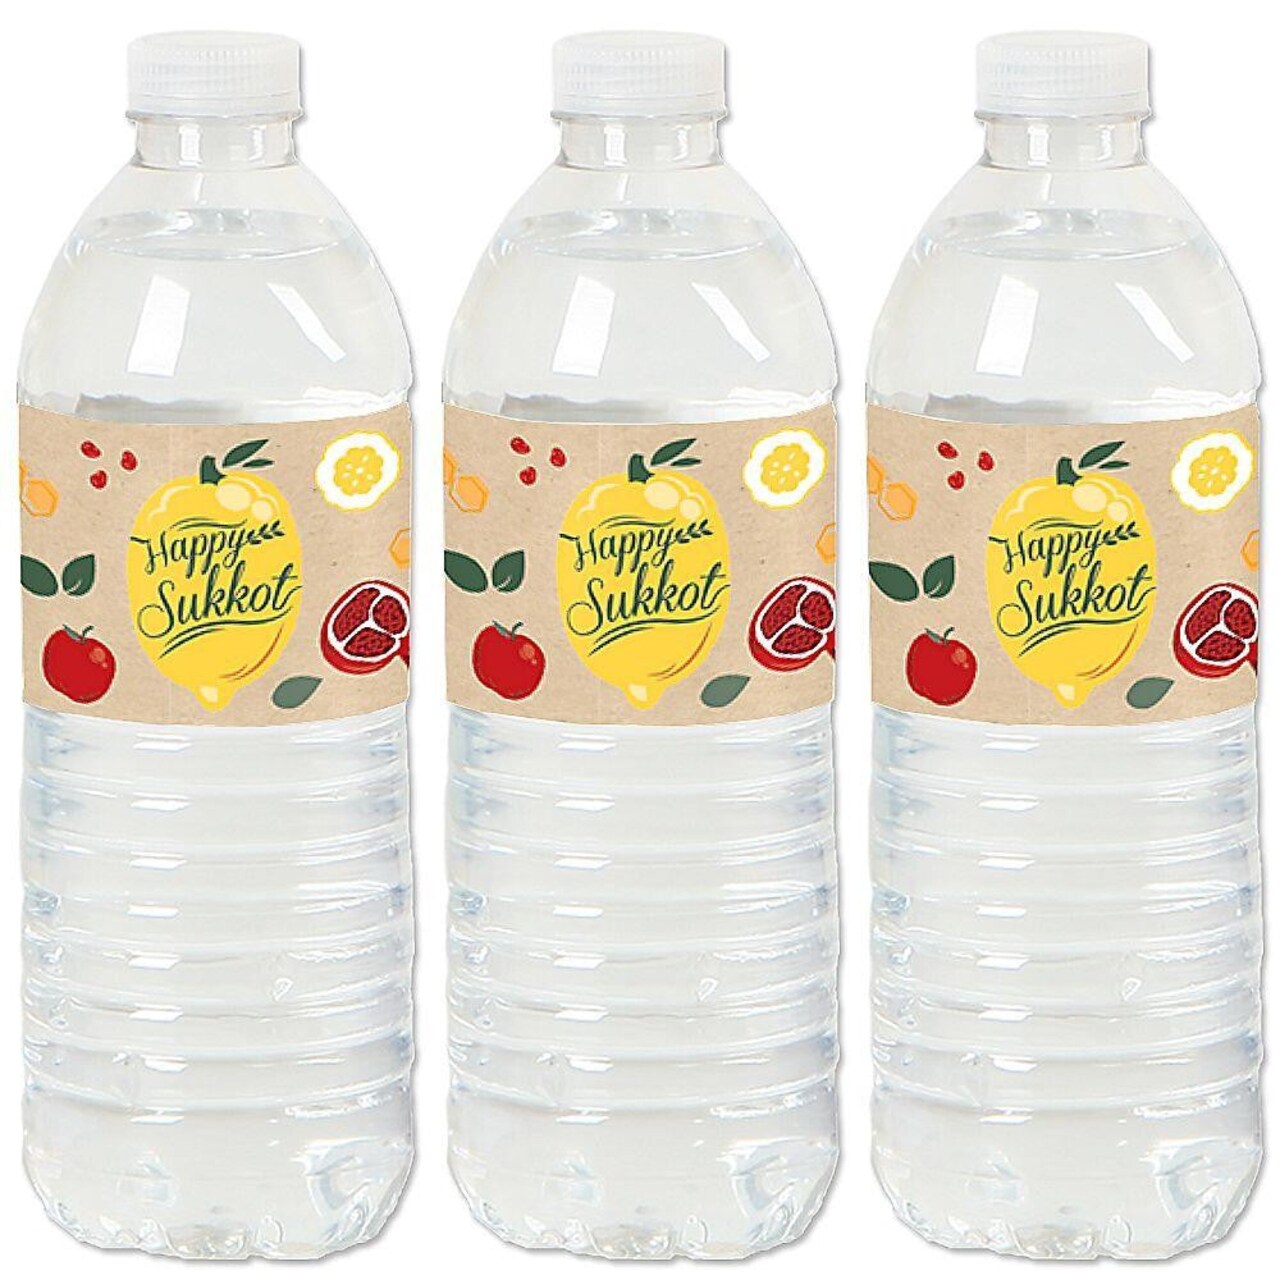 Big Dot of Happiness Sukkot - Sukkah Holiday Water Bottle Sticker Labels - Set of 20